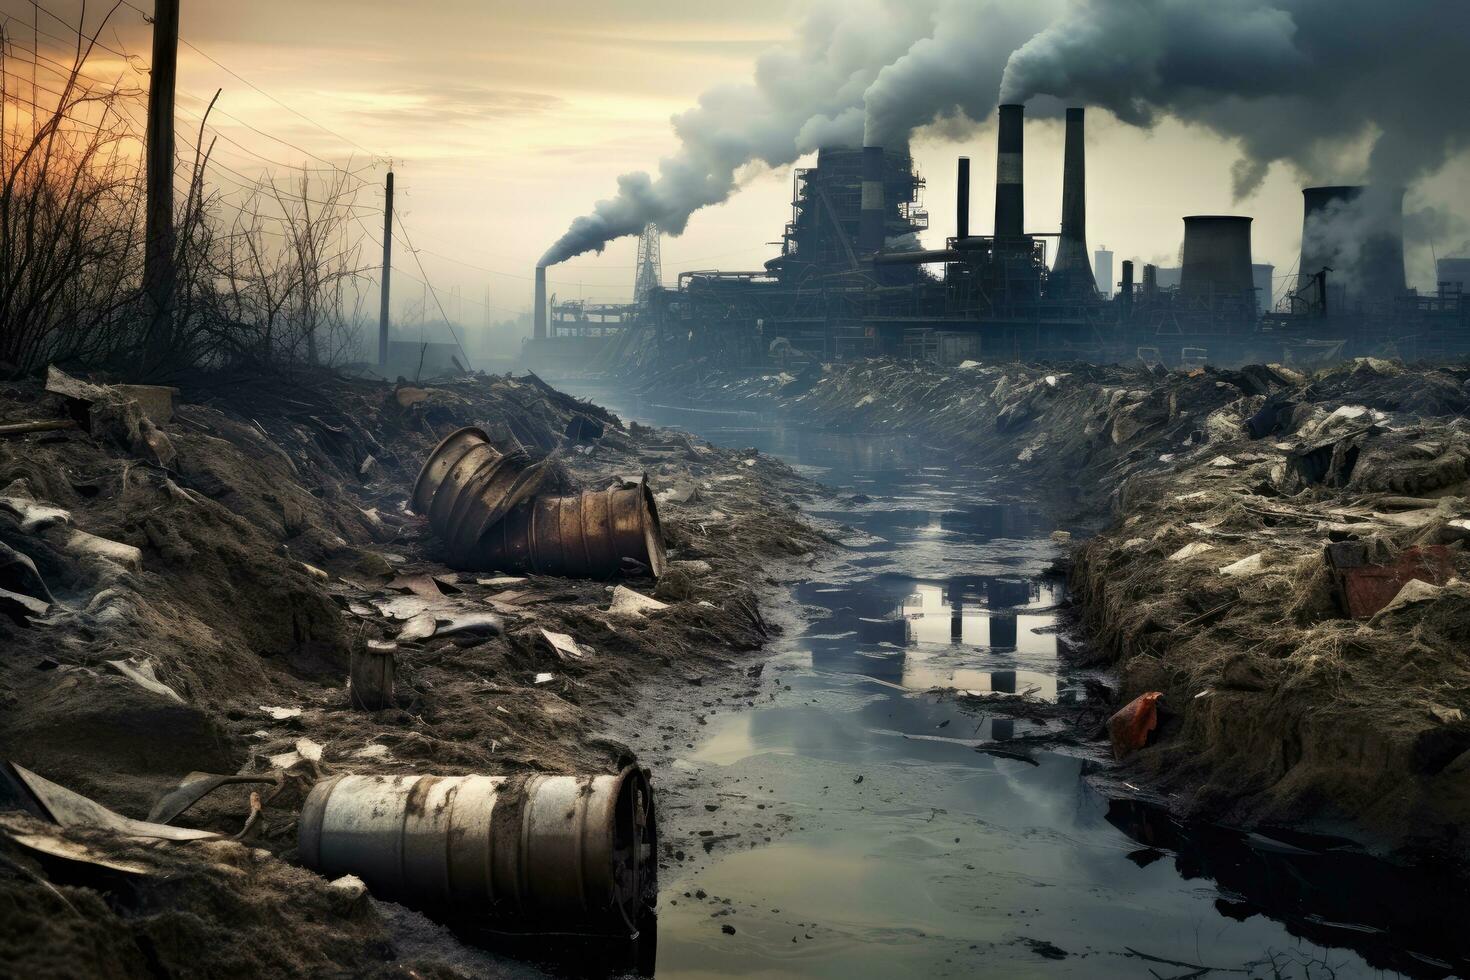 poluição do a ambiente. poluição do a ambiente. industrial paisagem, industrial panorama com poluído rio, poluição do a ambiente, de Meio Ambiente desastre, ai gerado foto